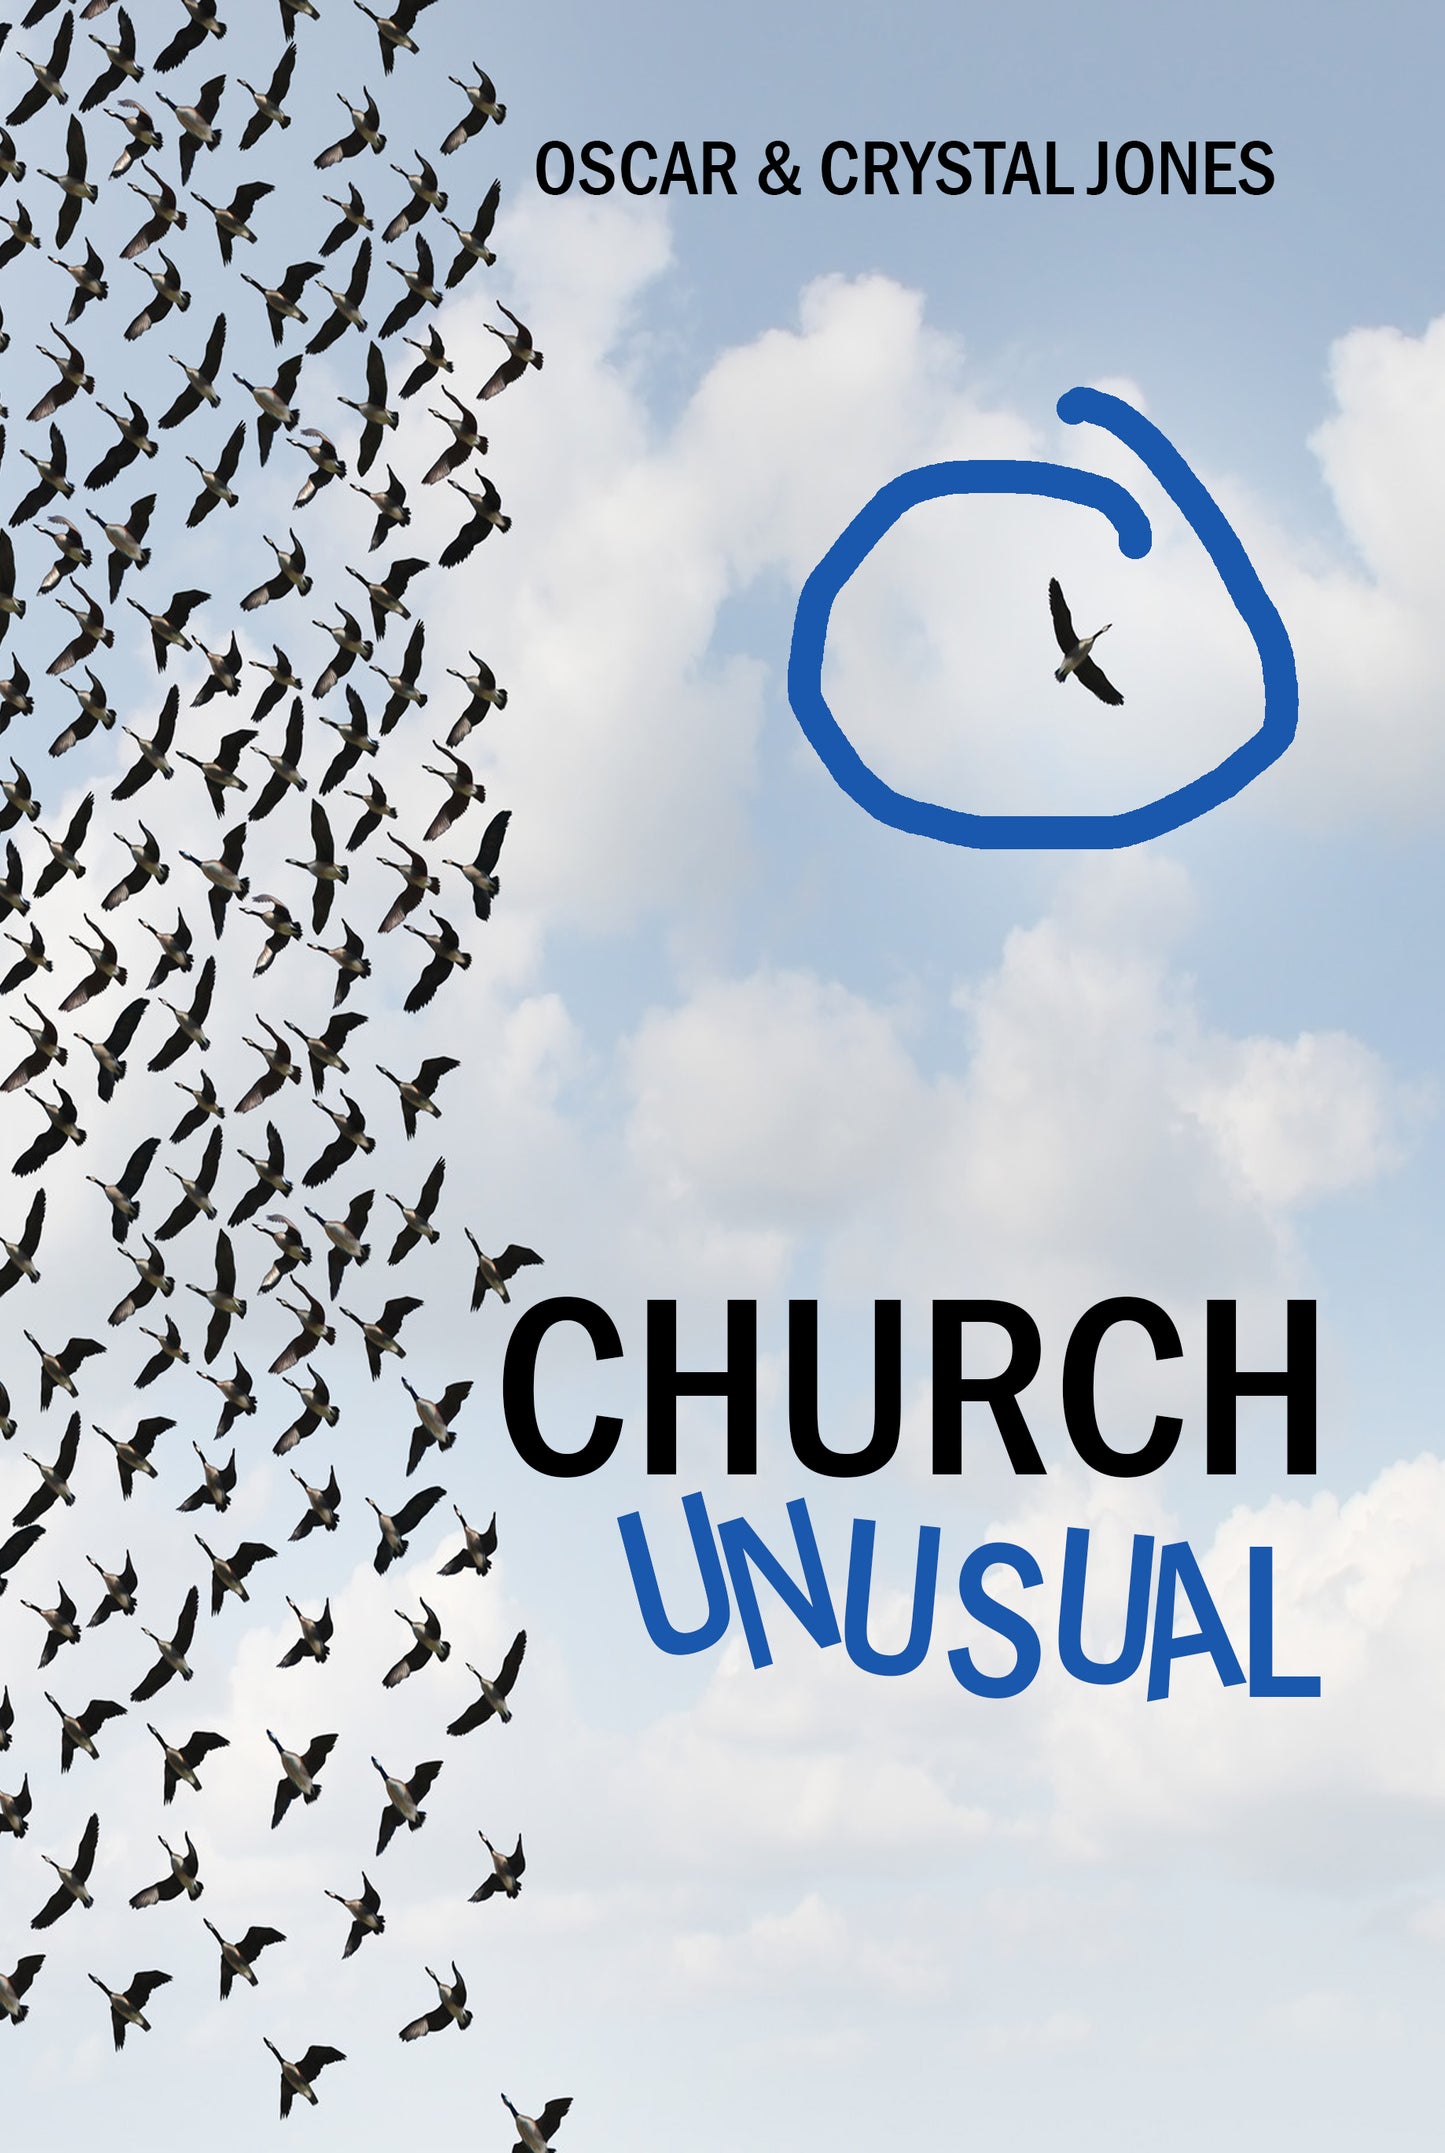 Church Unusual - Oscar and Crystal Jones